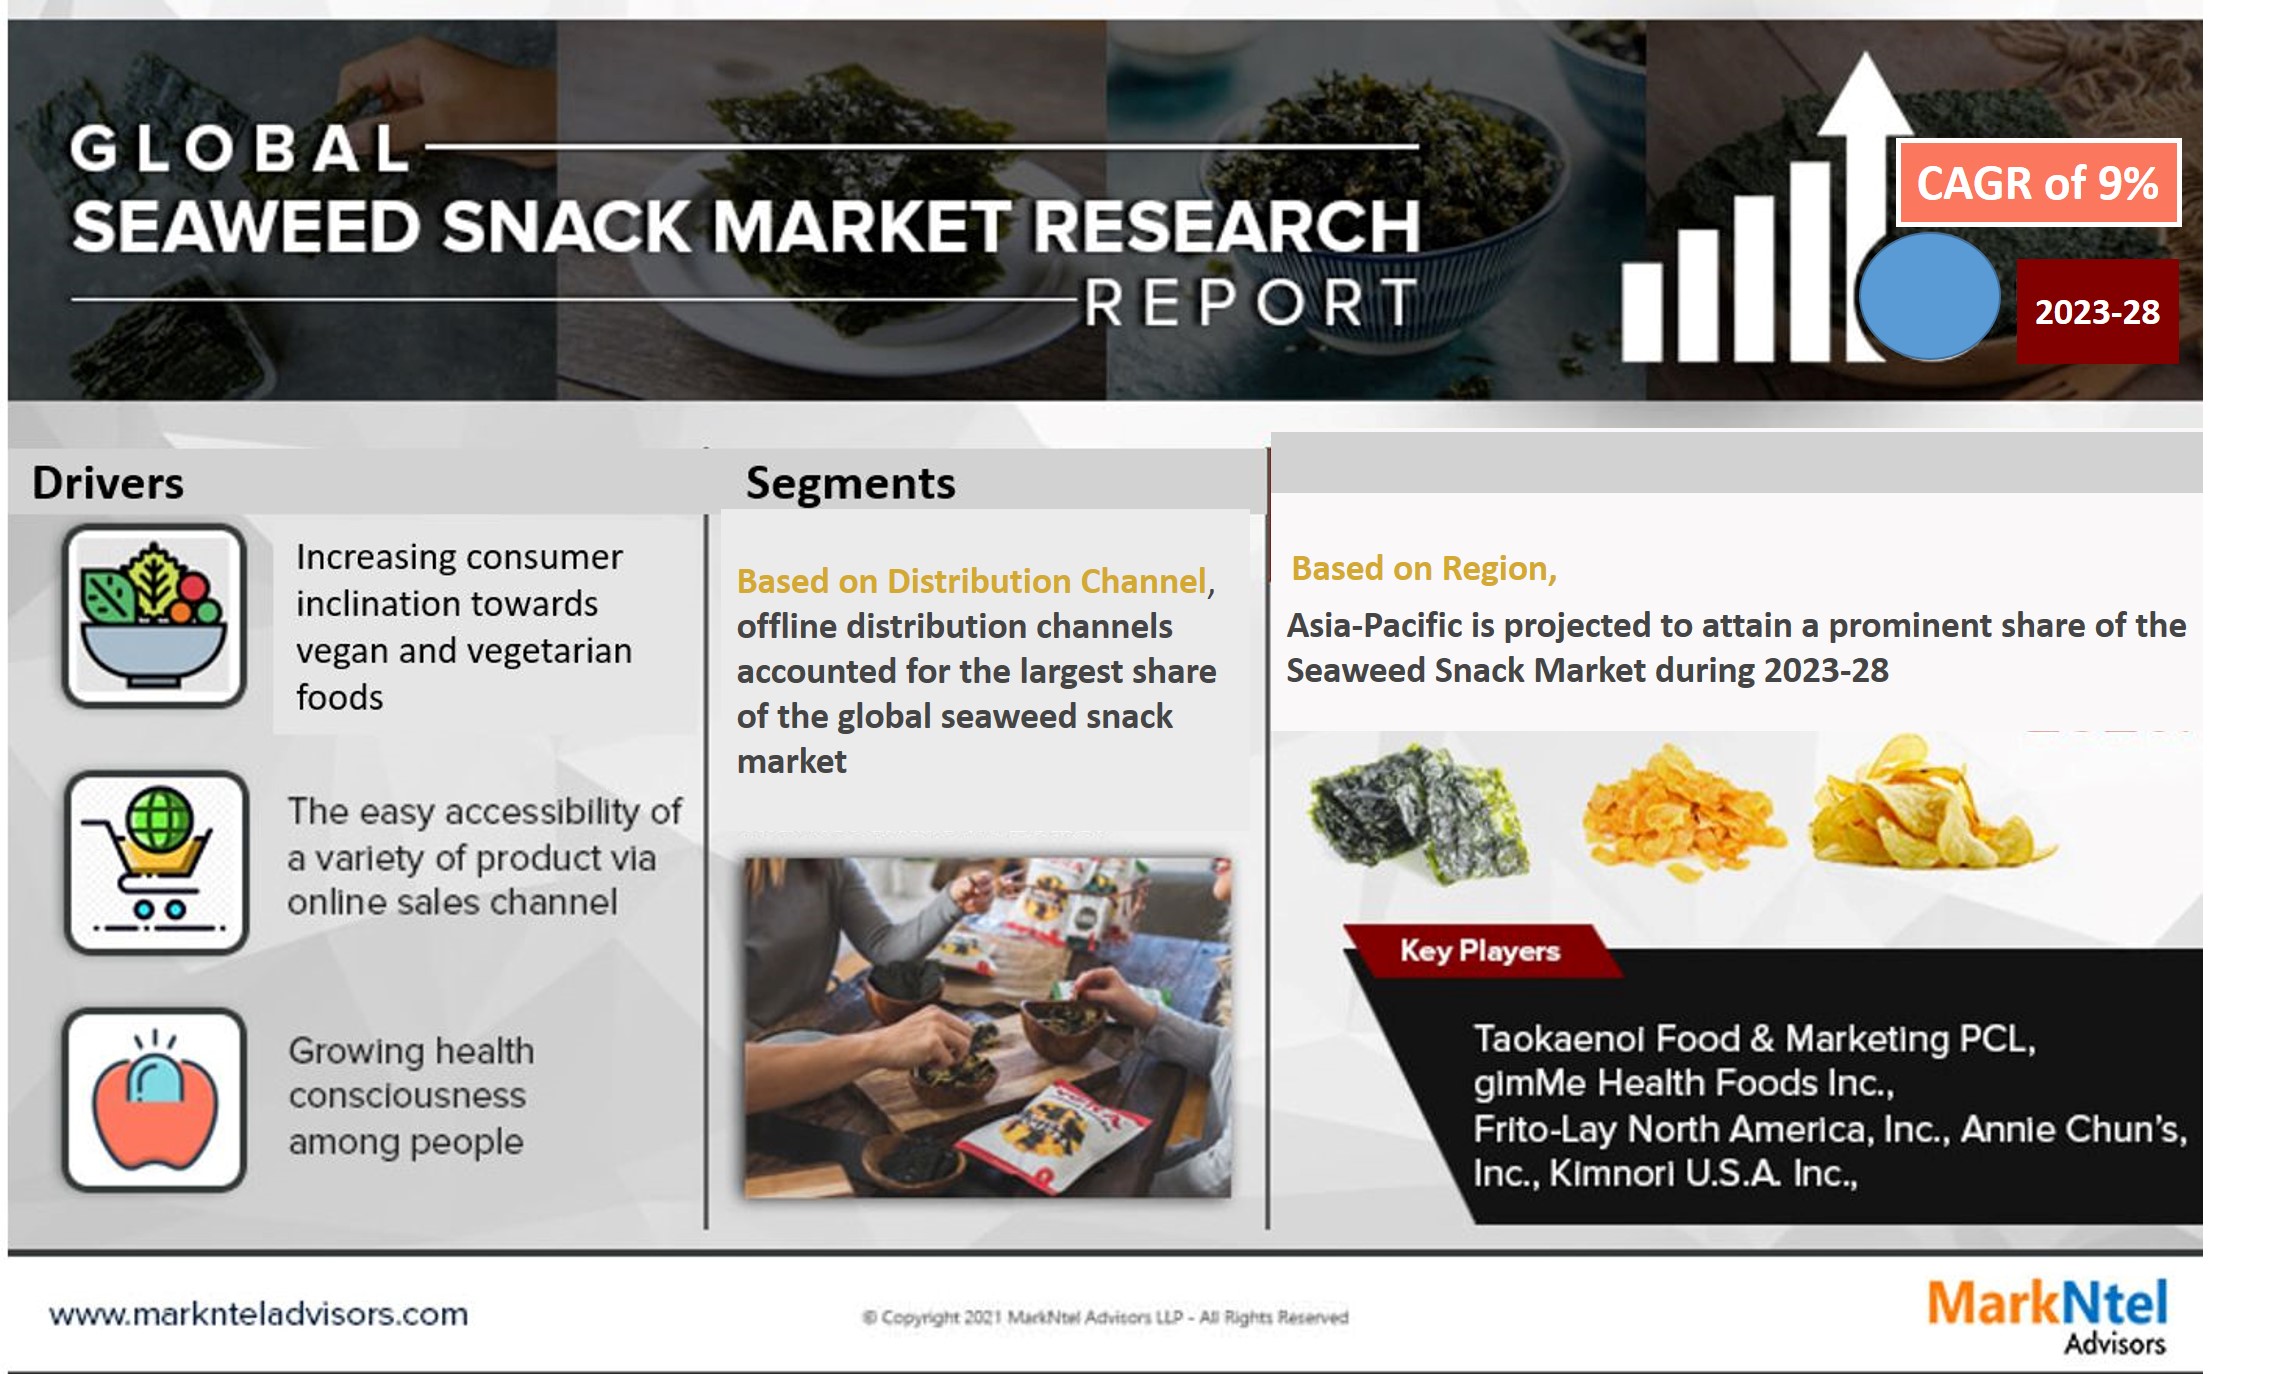 Global Seaweed Snack Market Research Report 